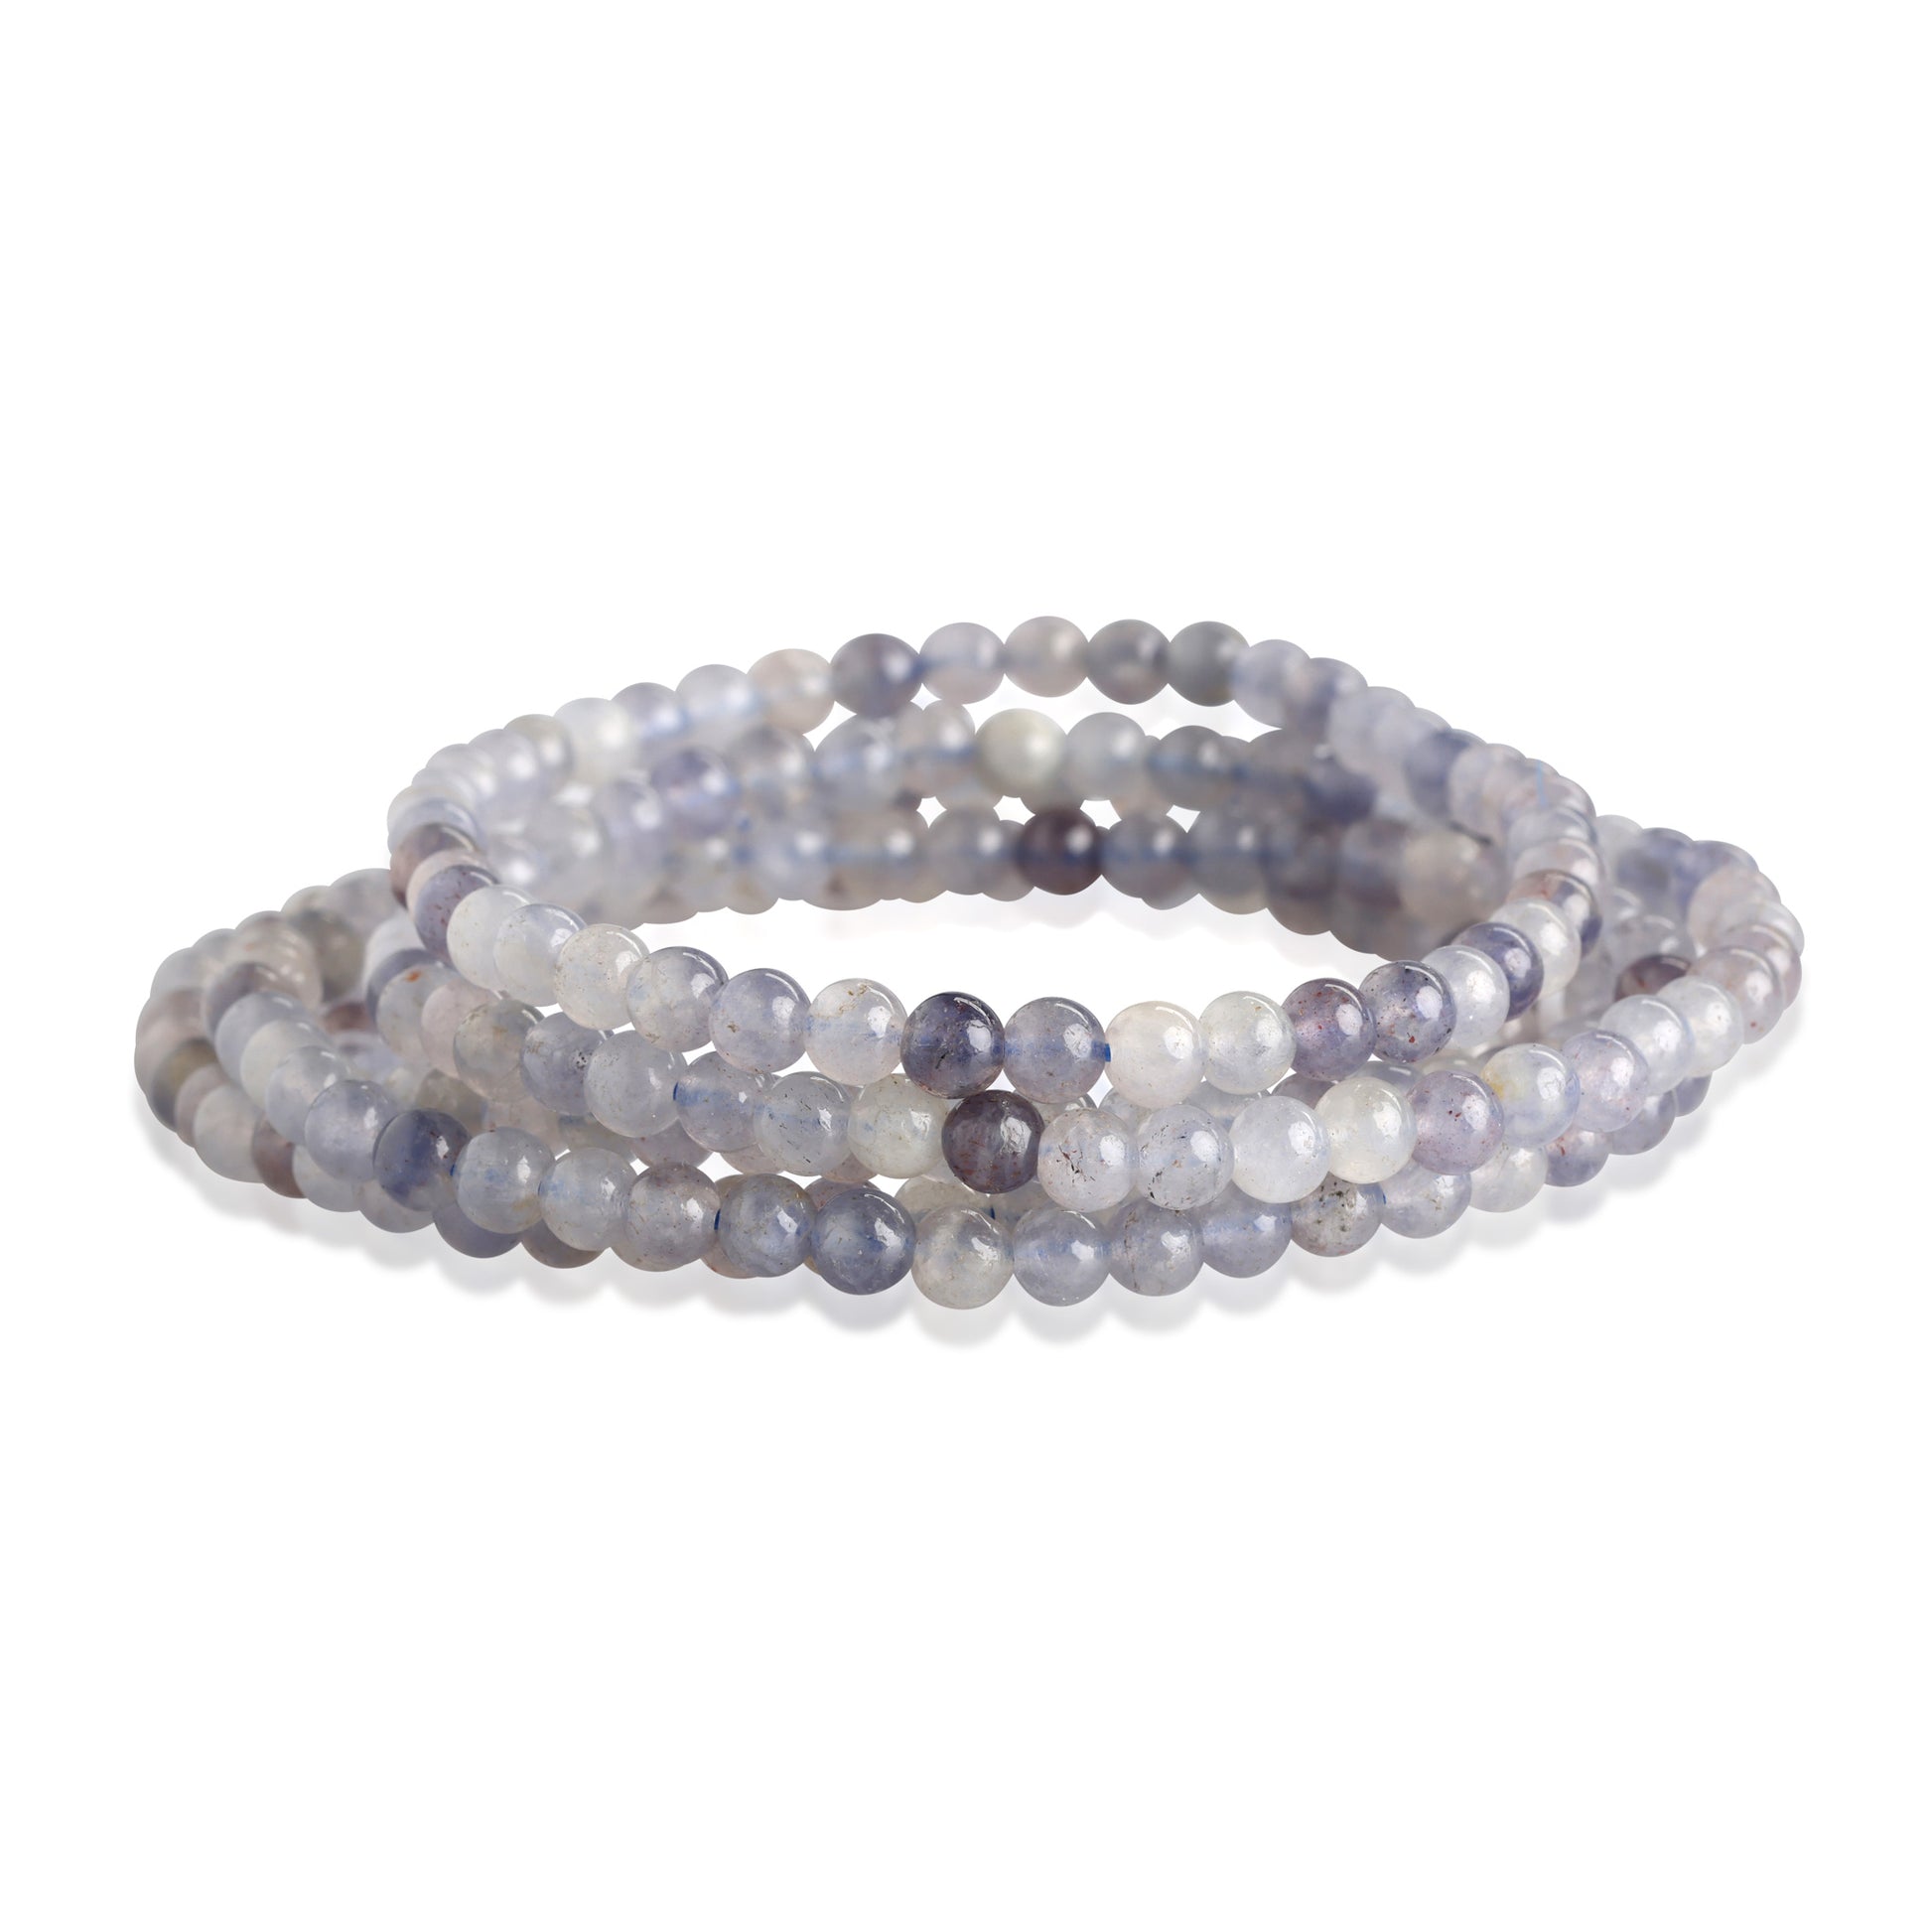 Iolite Beaded Bracelet - Small Polished Beads